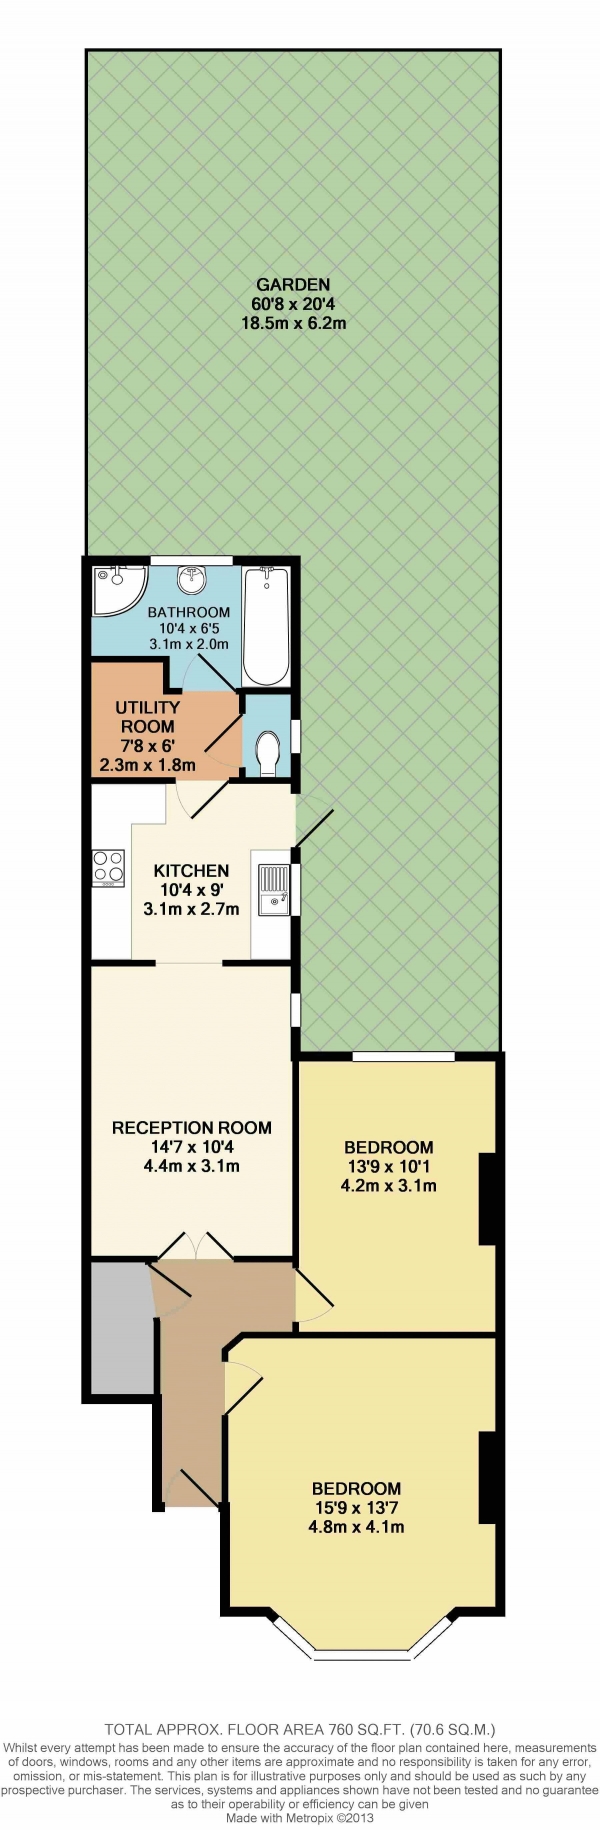 Floor Plan Image for 2 Bedroom Apartment for Sale in Kelvin Avenue, Palmers Green, N13